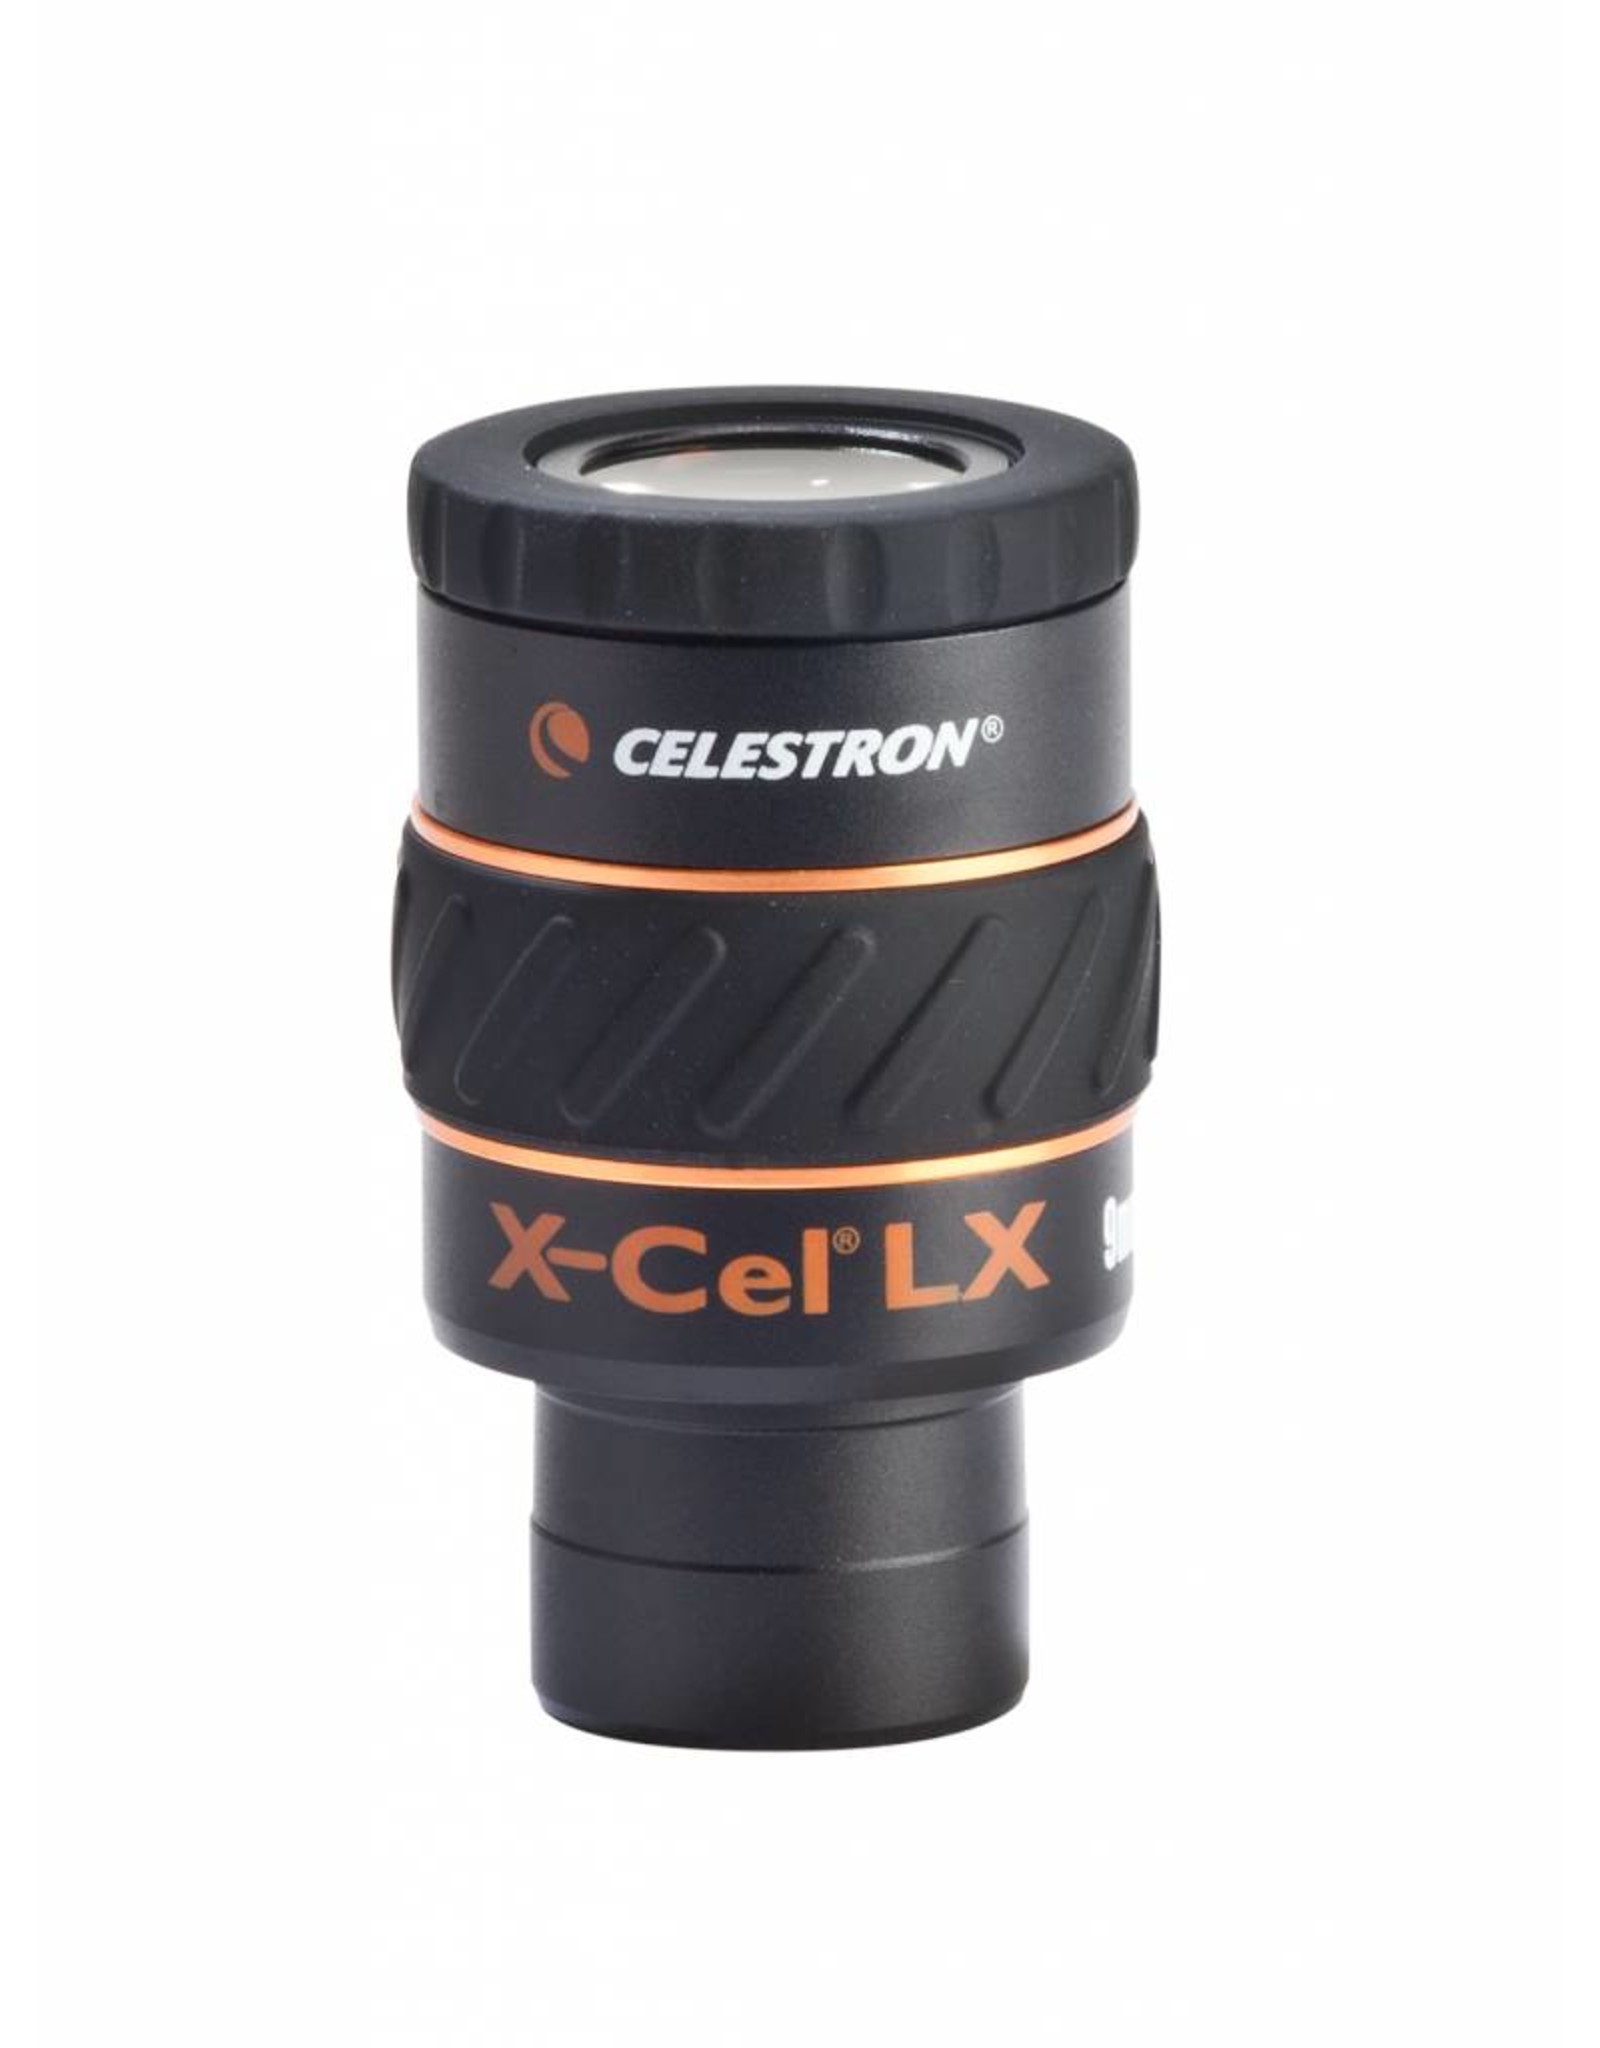 Celestron Celestron X-Cel LX 9 mm Eyepiece